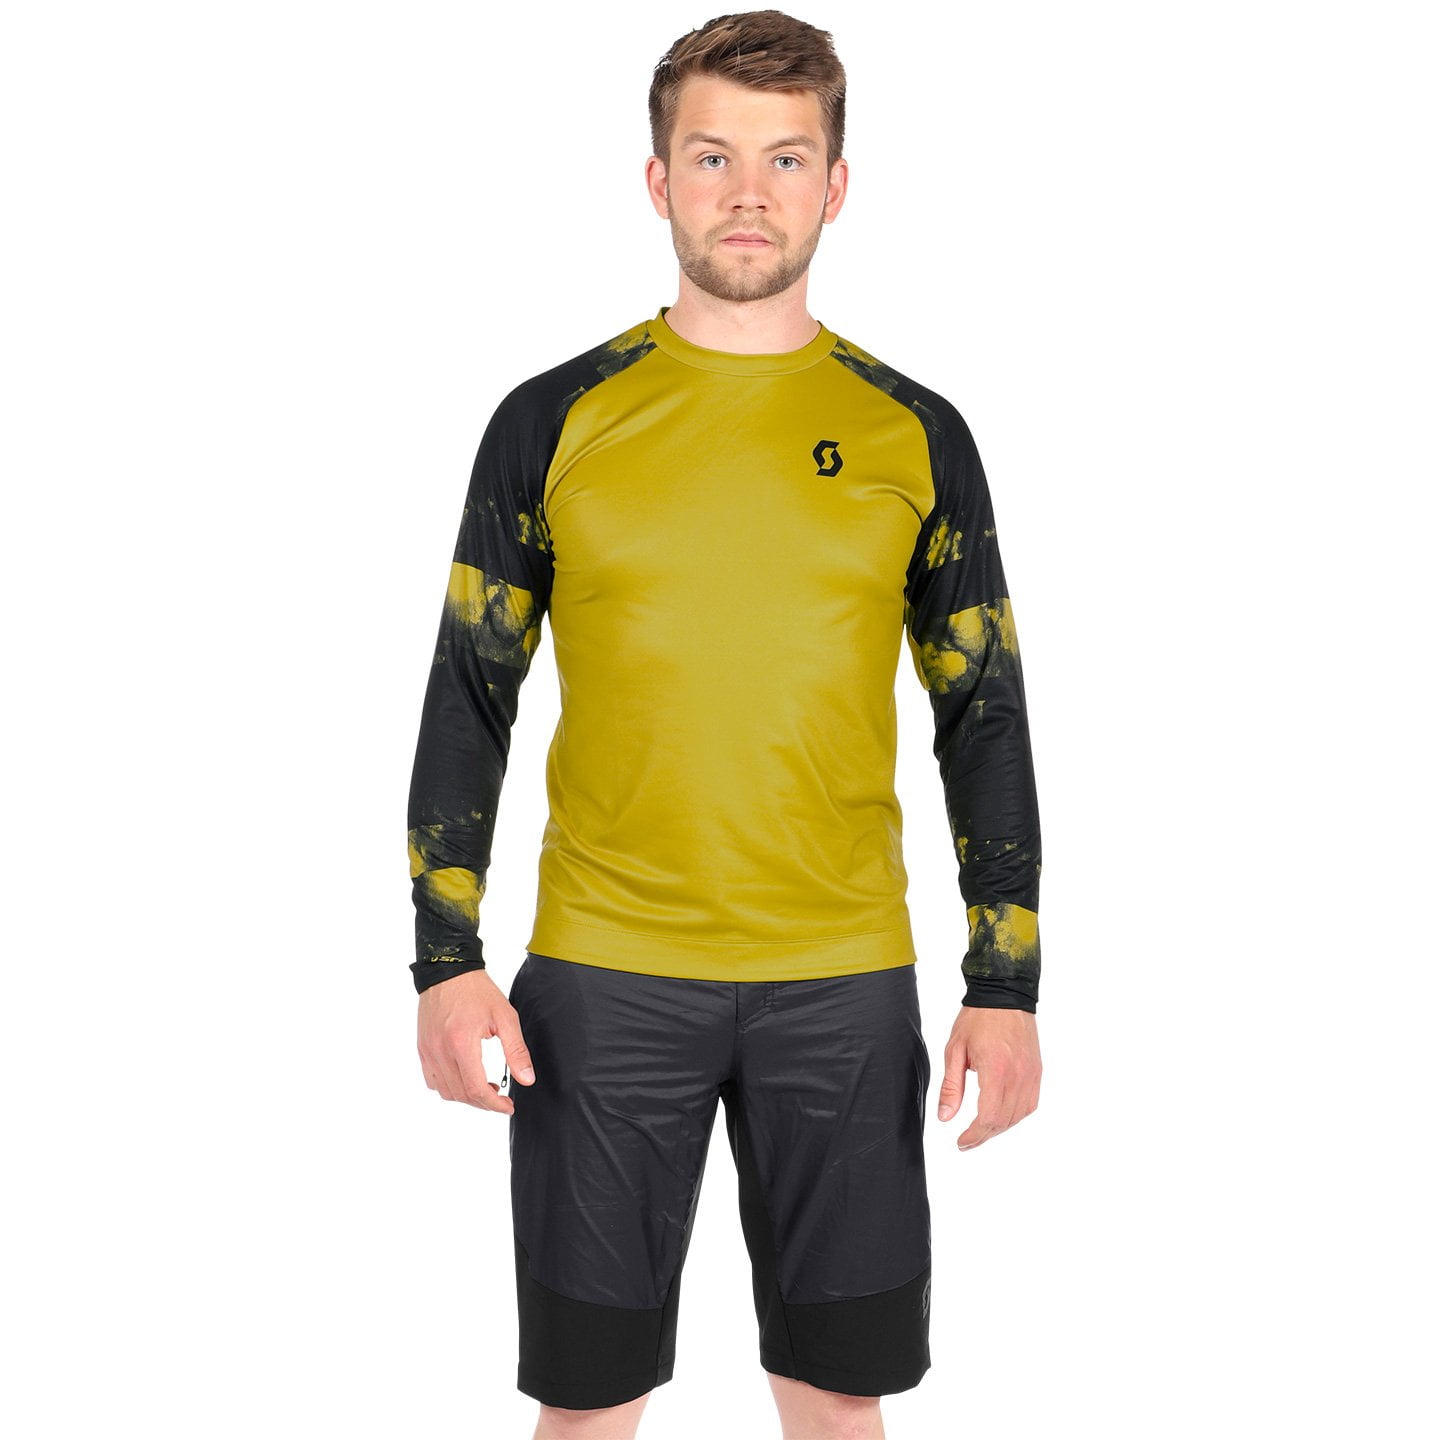 SCOTT Trail Storm Insuloft AL Set (cycling jersey + cycling shorts) Set (2 pieces), for men